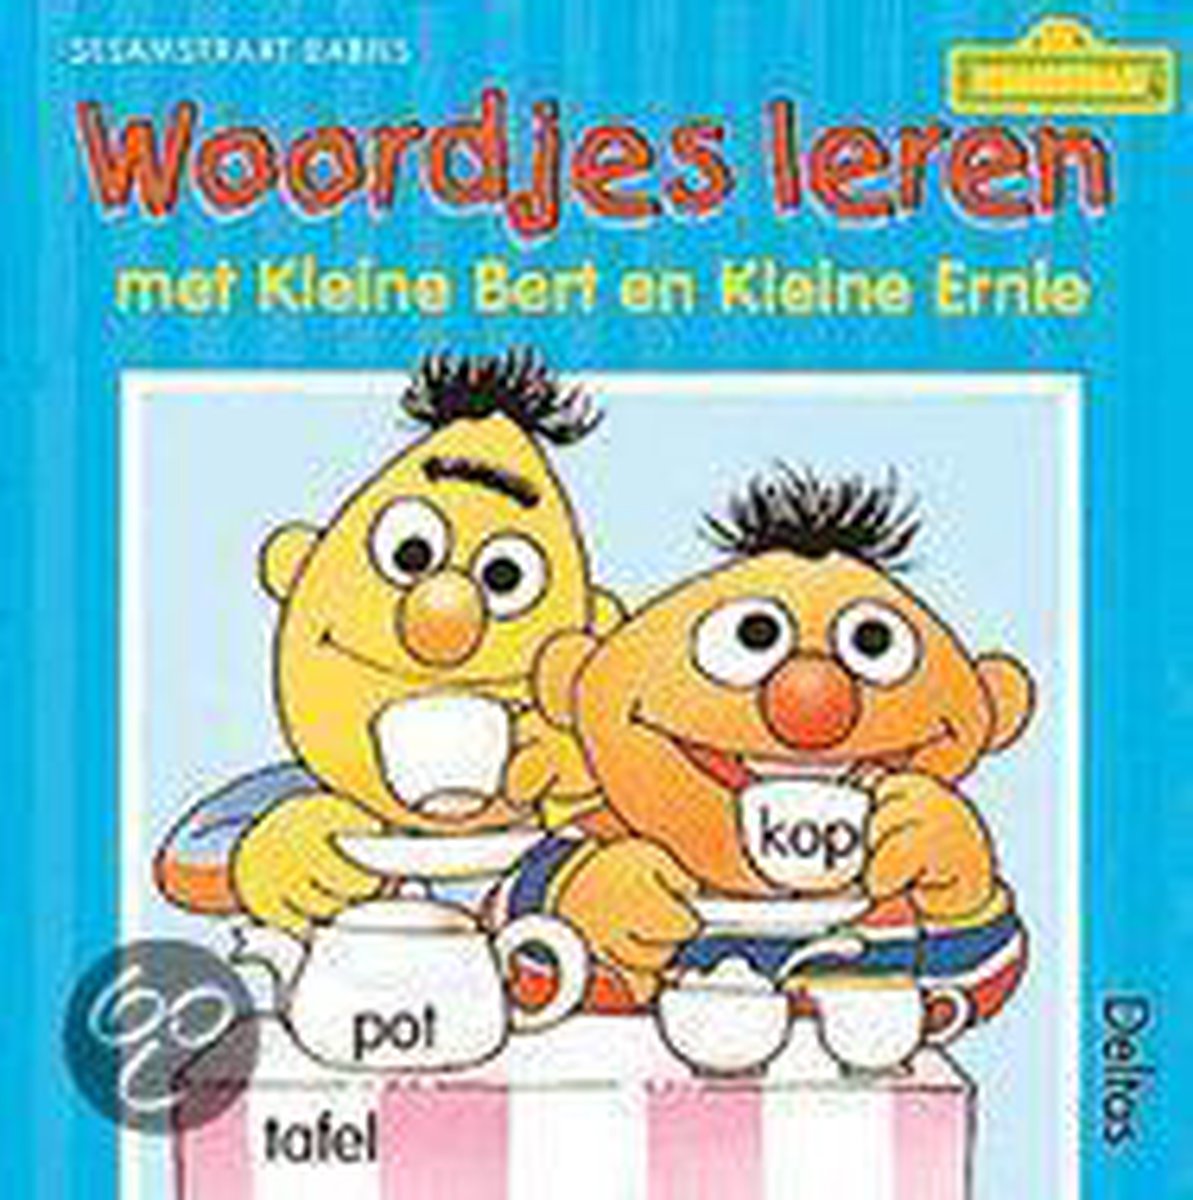 Woordjes leren met kleine Bert en kleine Ernie / Sesamstraat babies